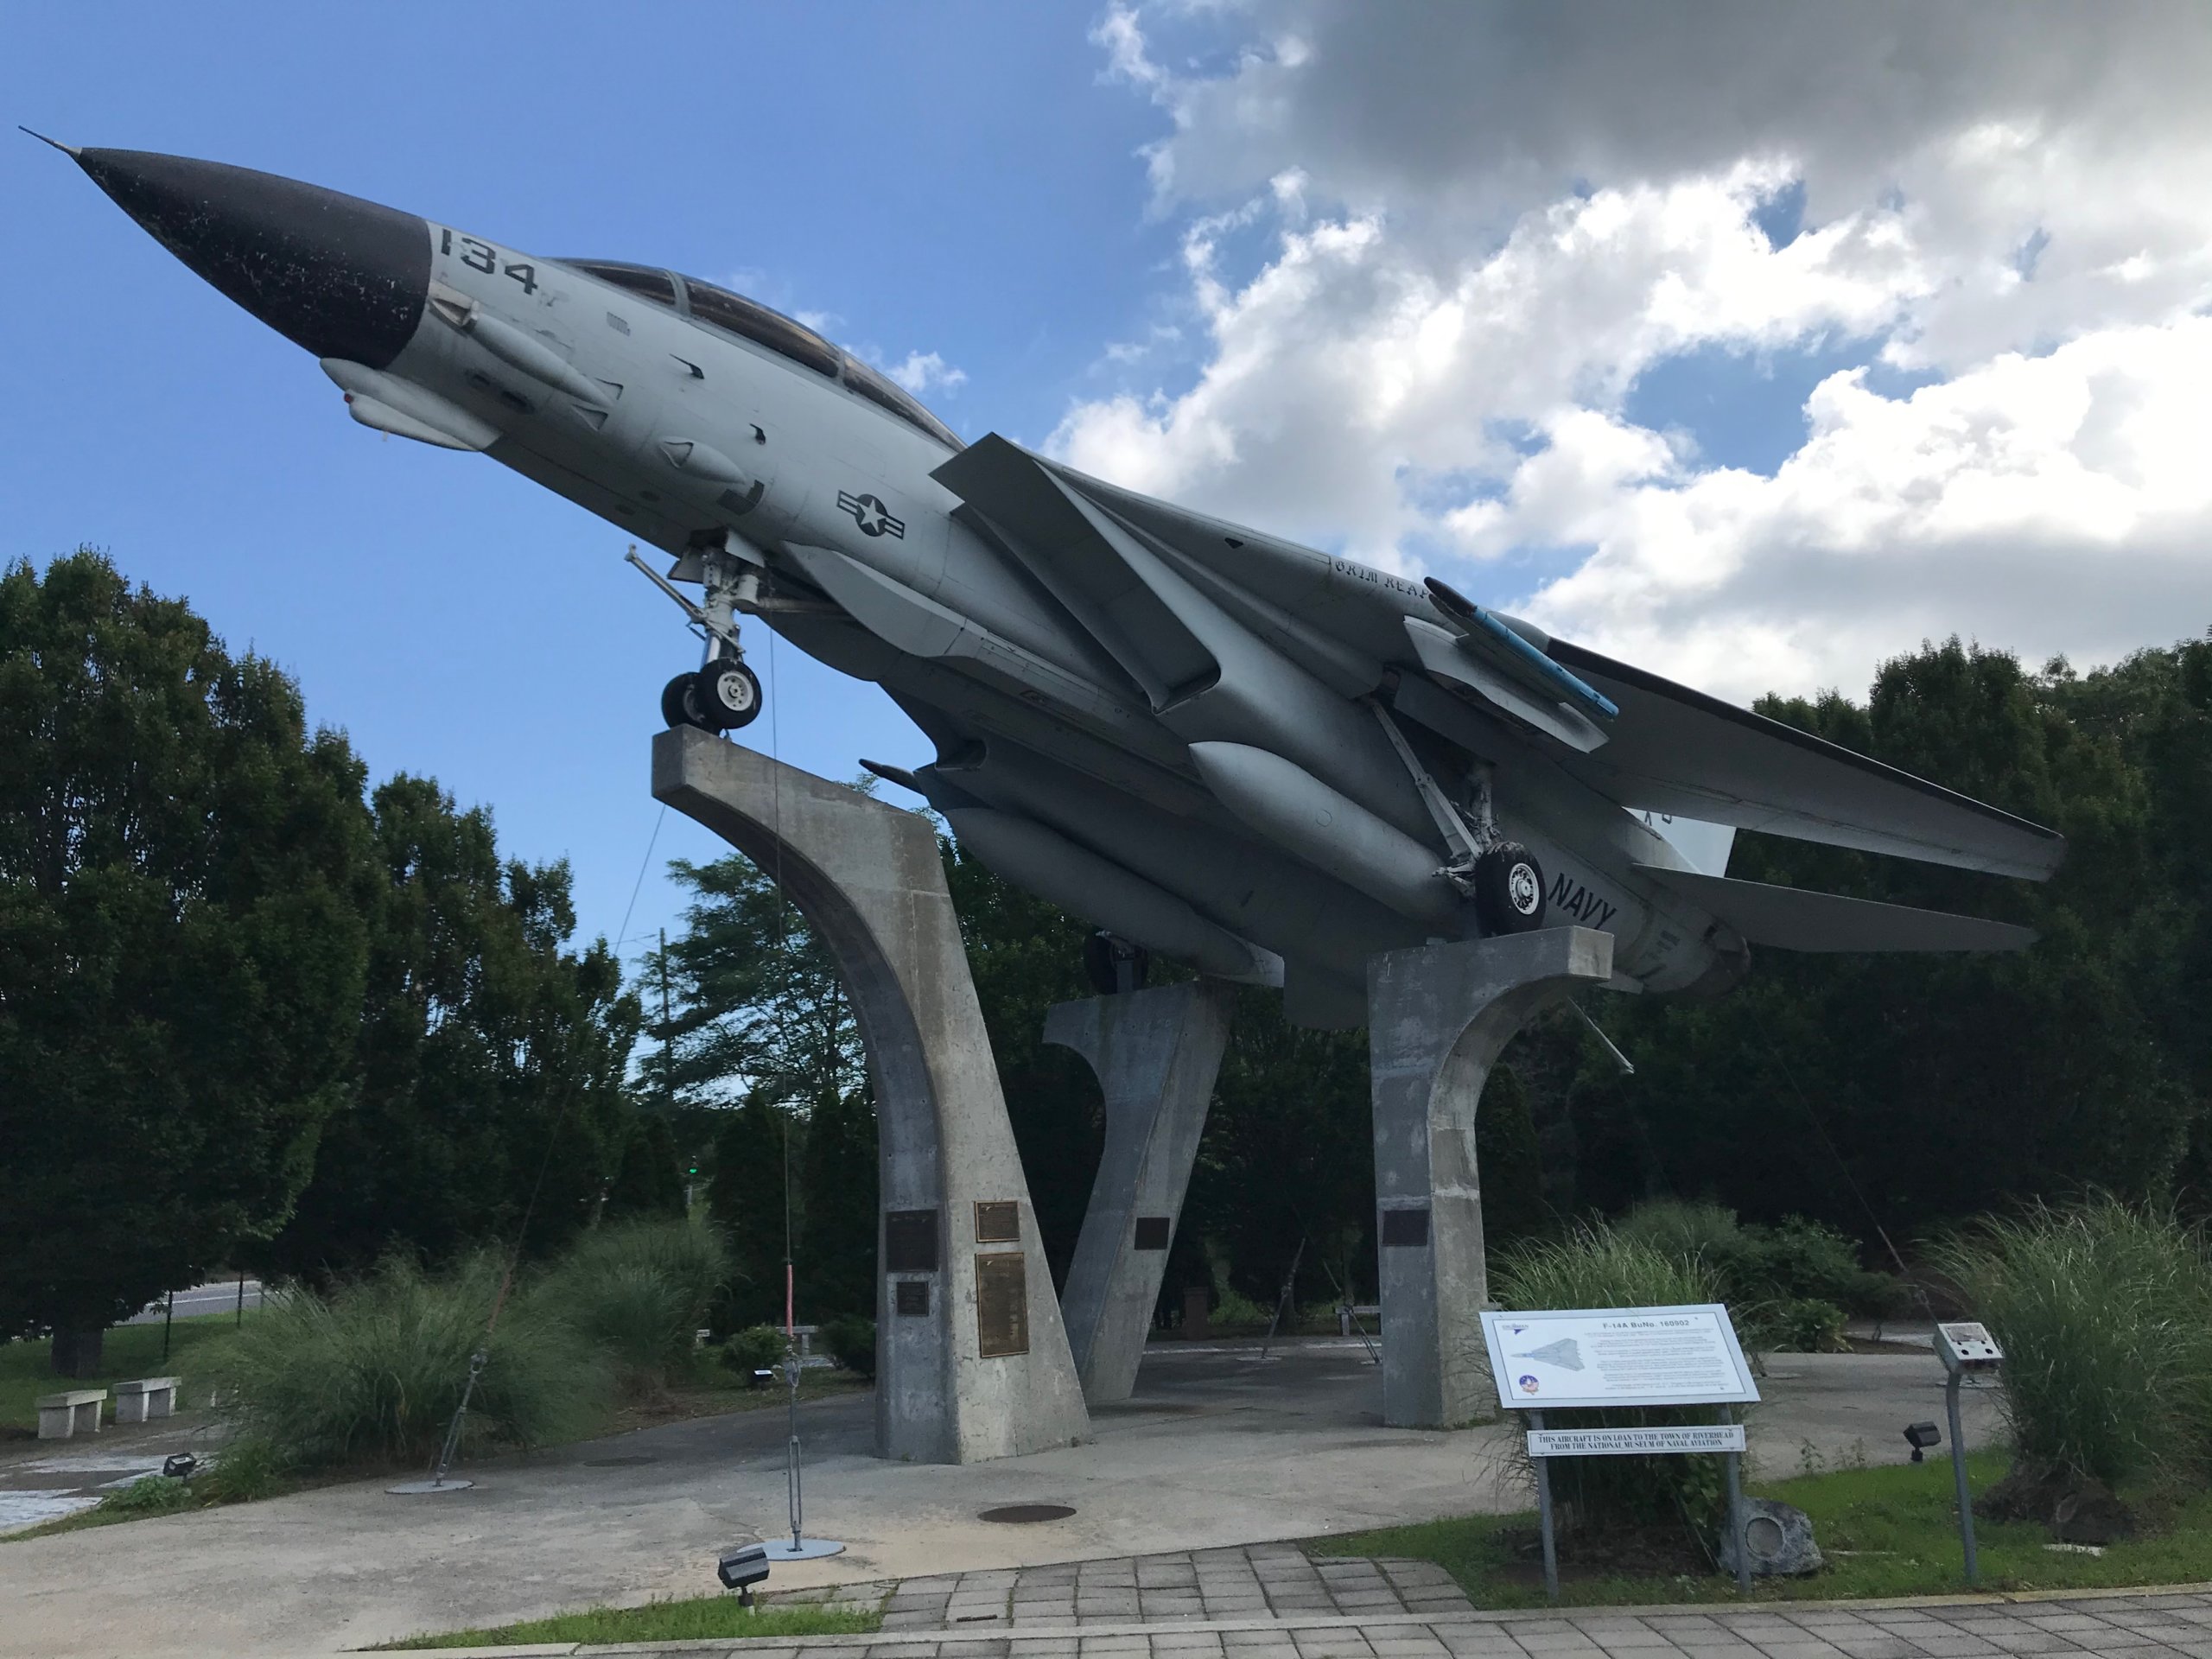 F-14A Tomcat on display at former Grumman property in Calverton